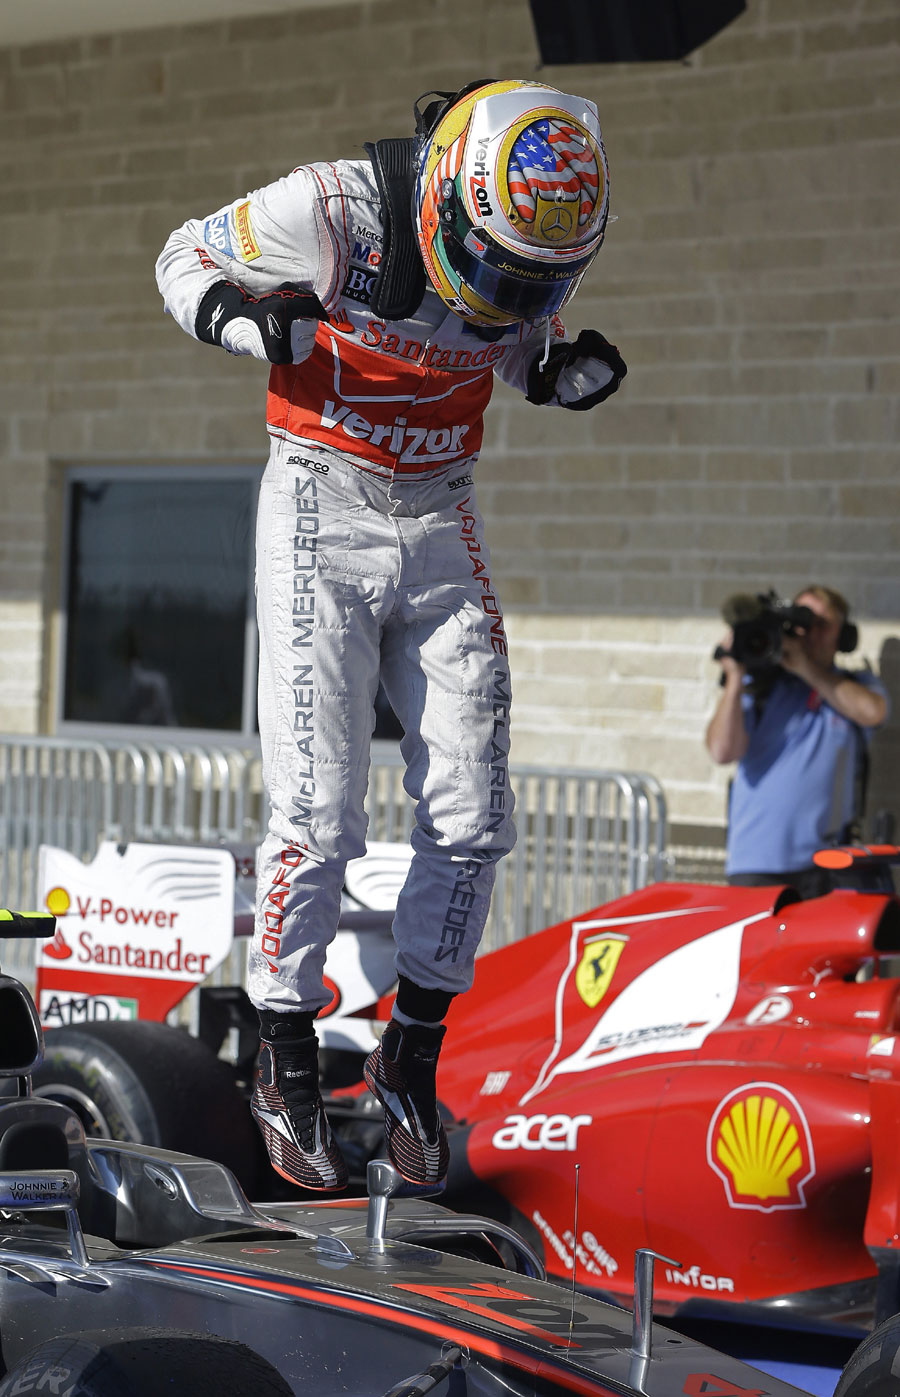 Lewis Hamilton celebrates victory